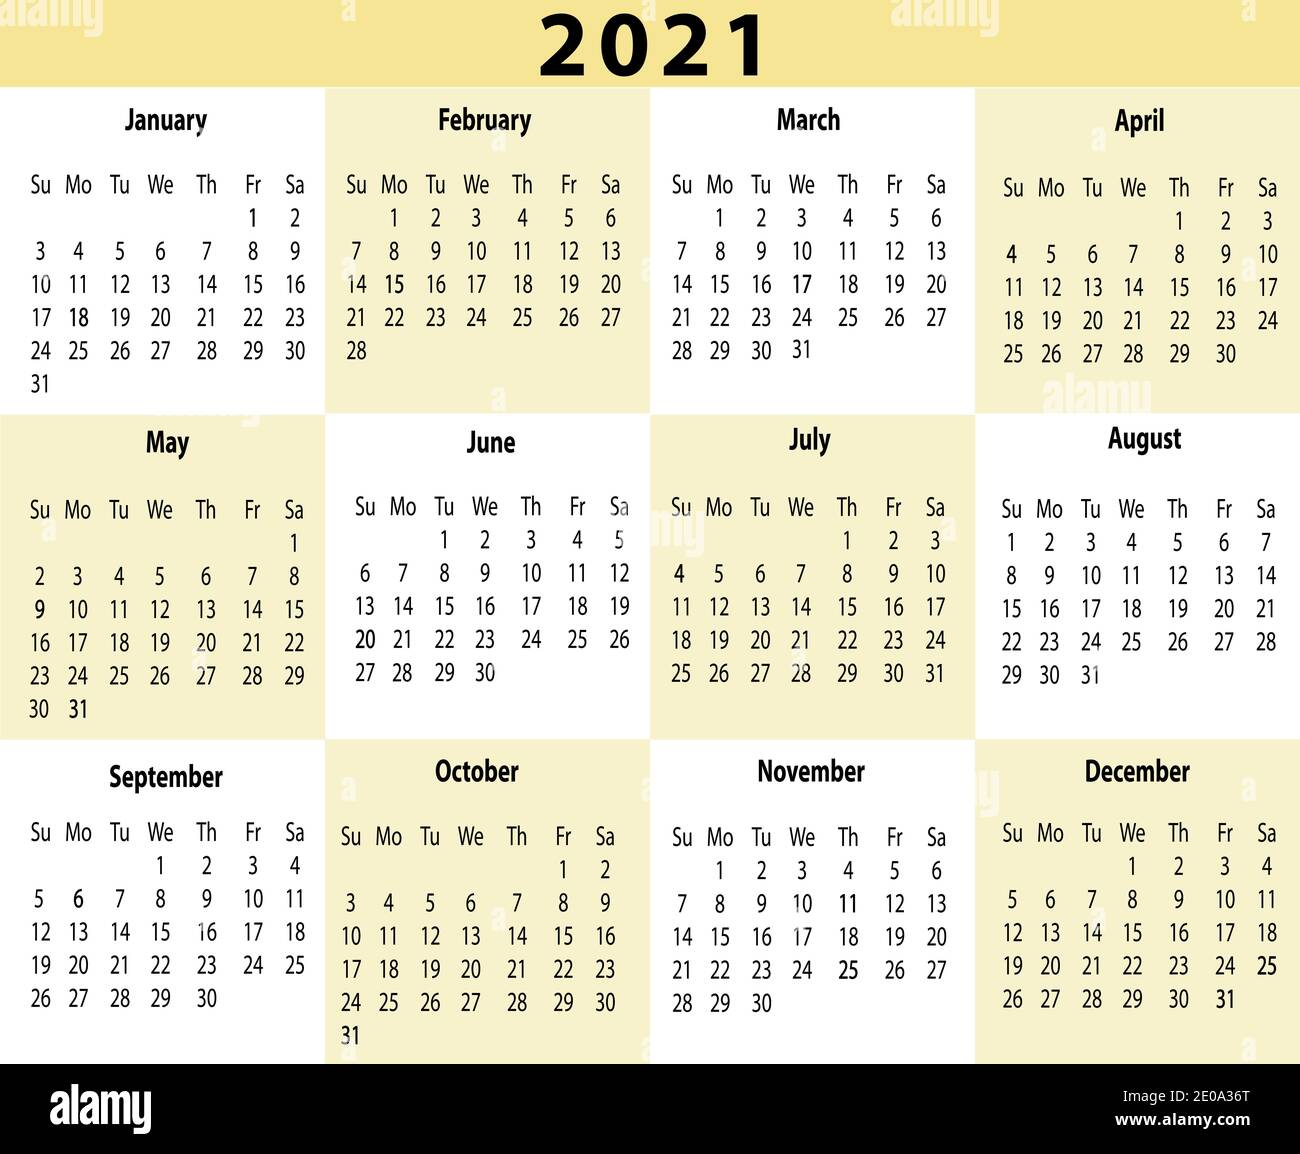 2021 Year Calendar One Page Horizontal Stock Photo